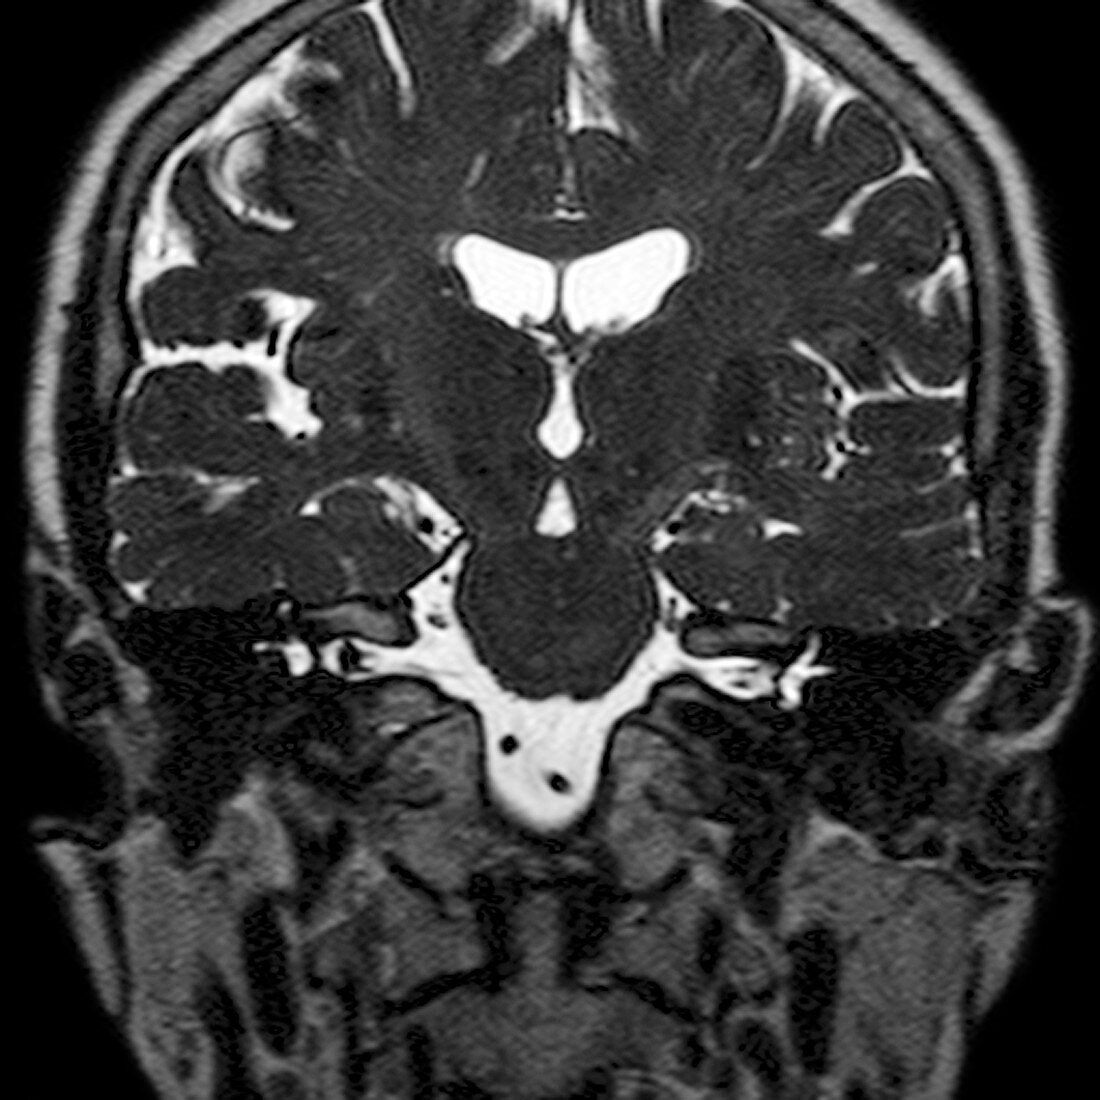 Acoustic neuroma,MRI scan